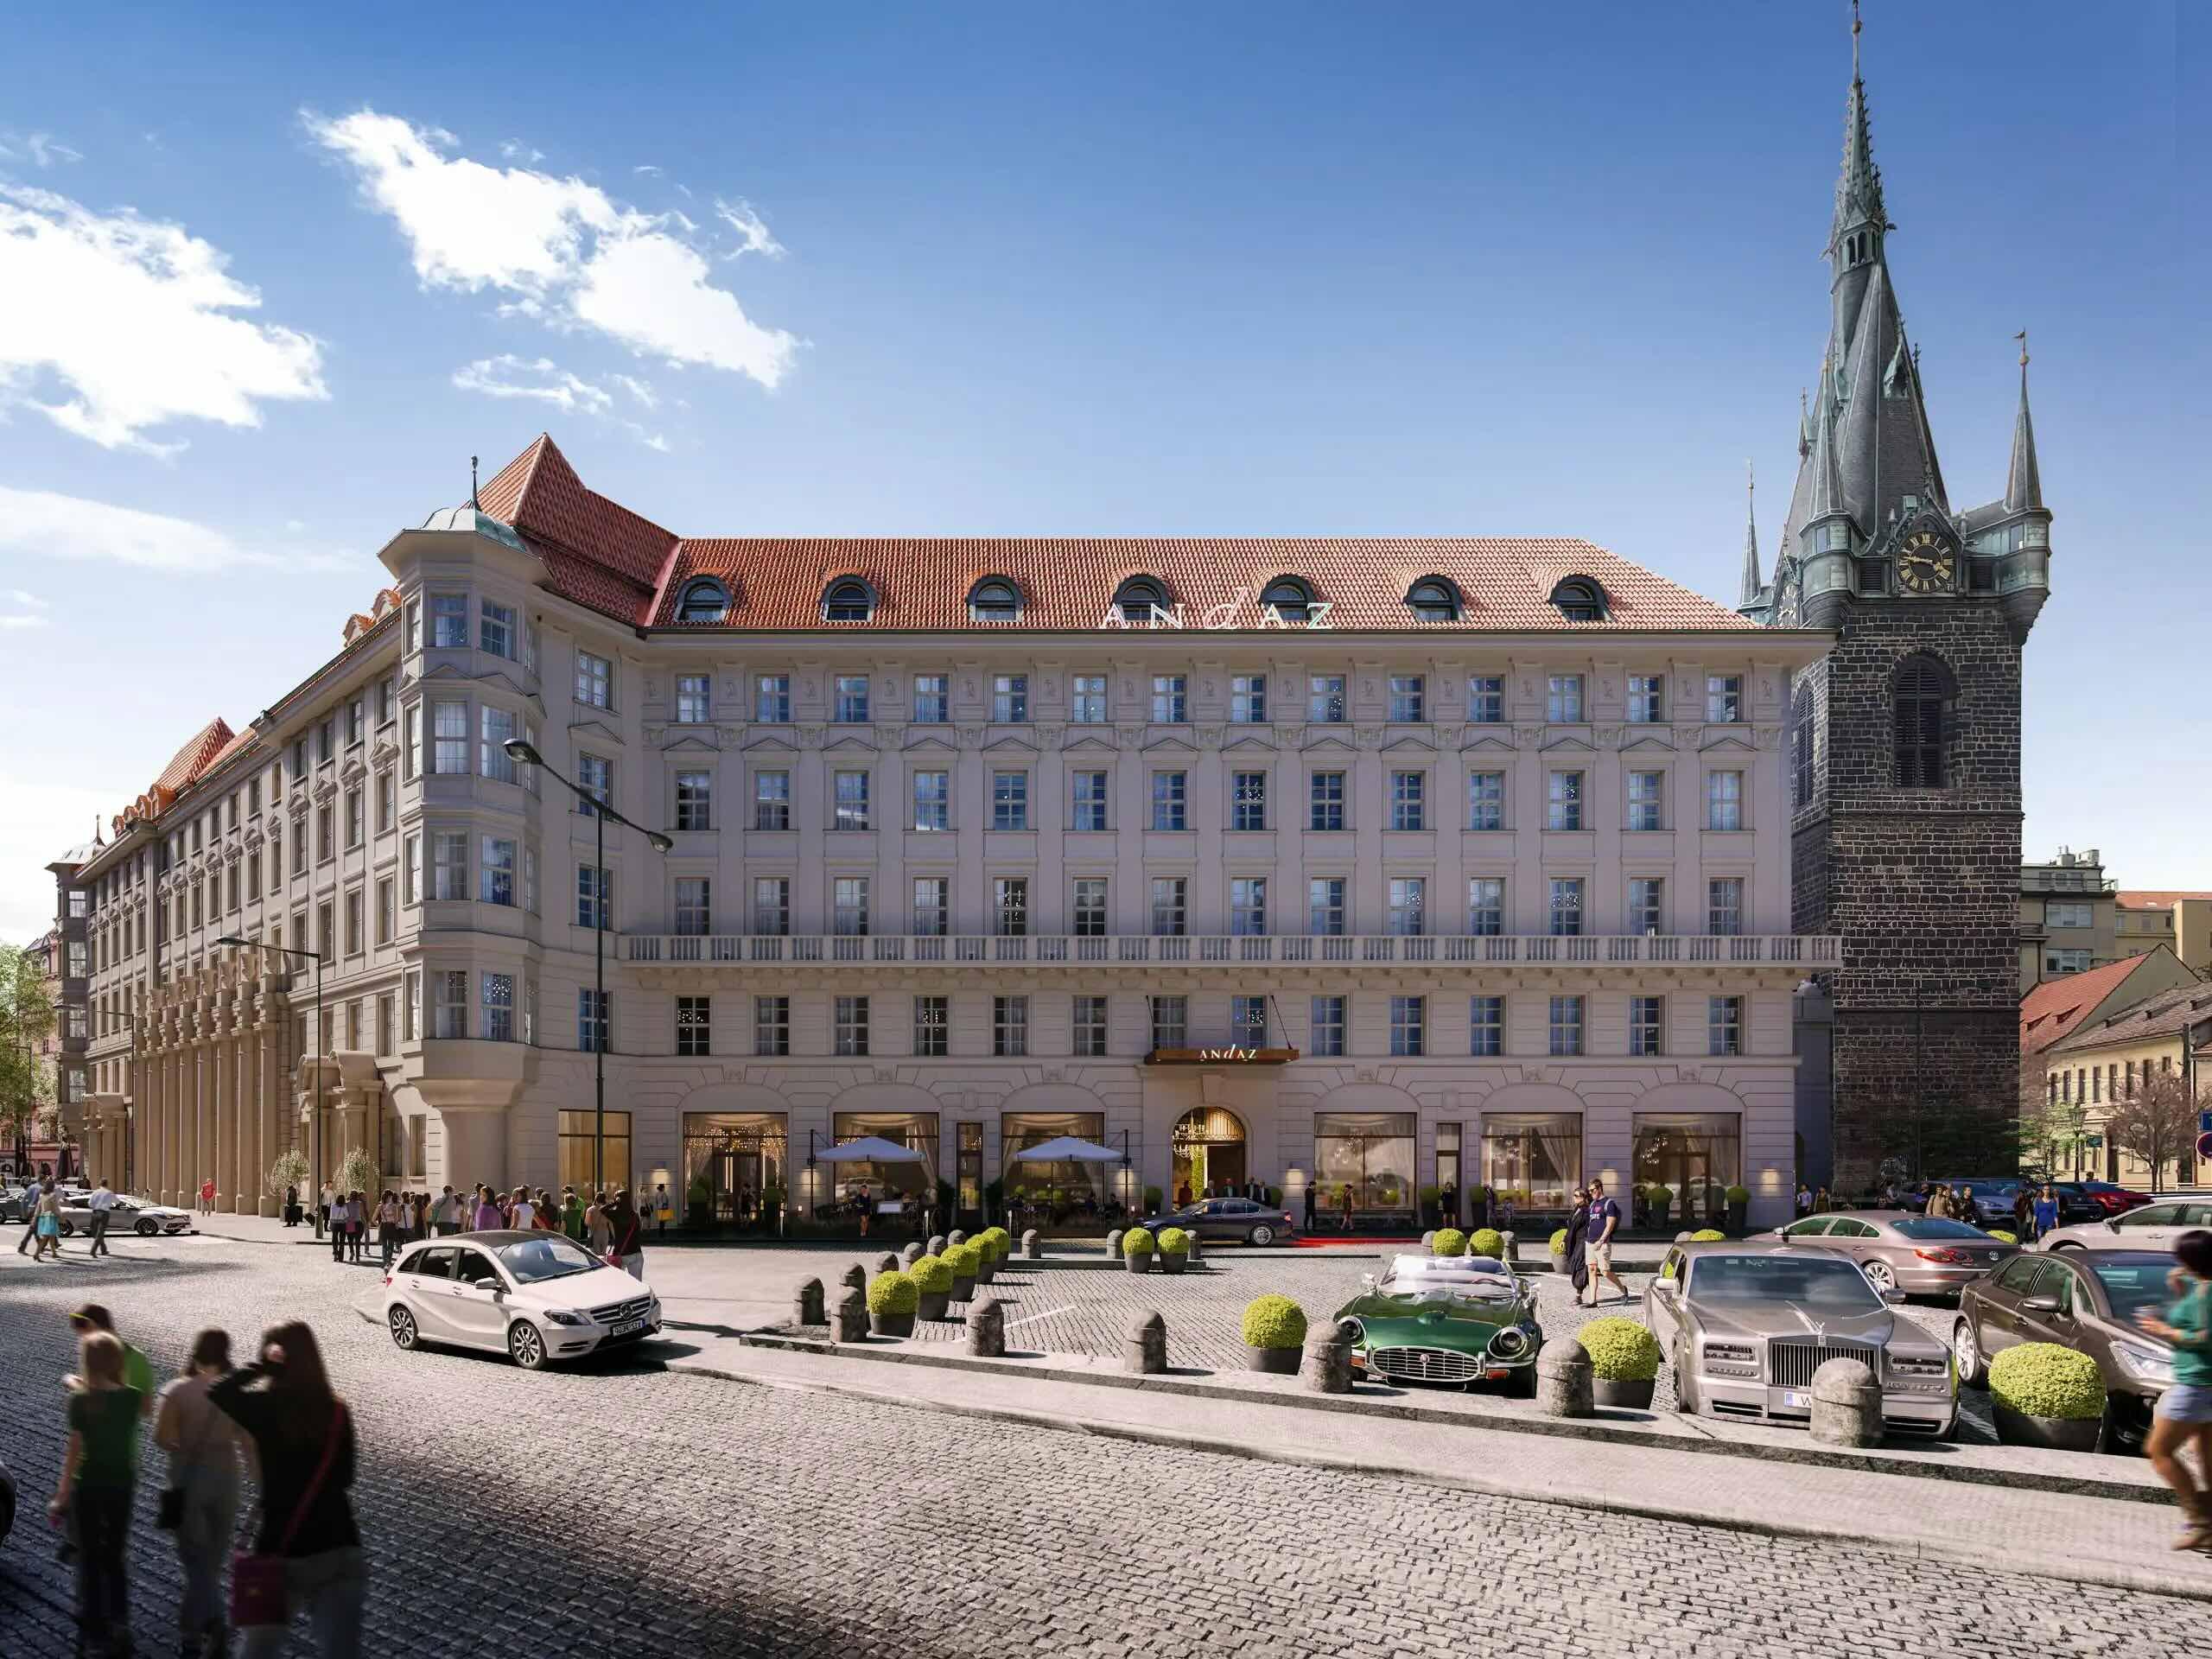 Globetotter: Andaz Prague is a stylish spot to celebrate the city